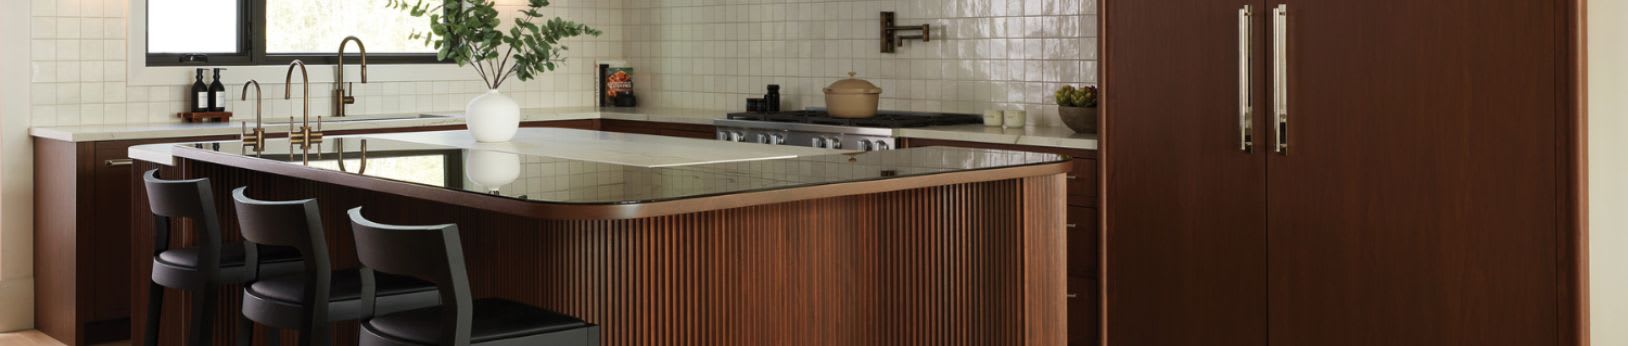 flat-cut walnut modern kitchen cabinets and island